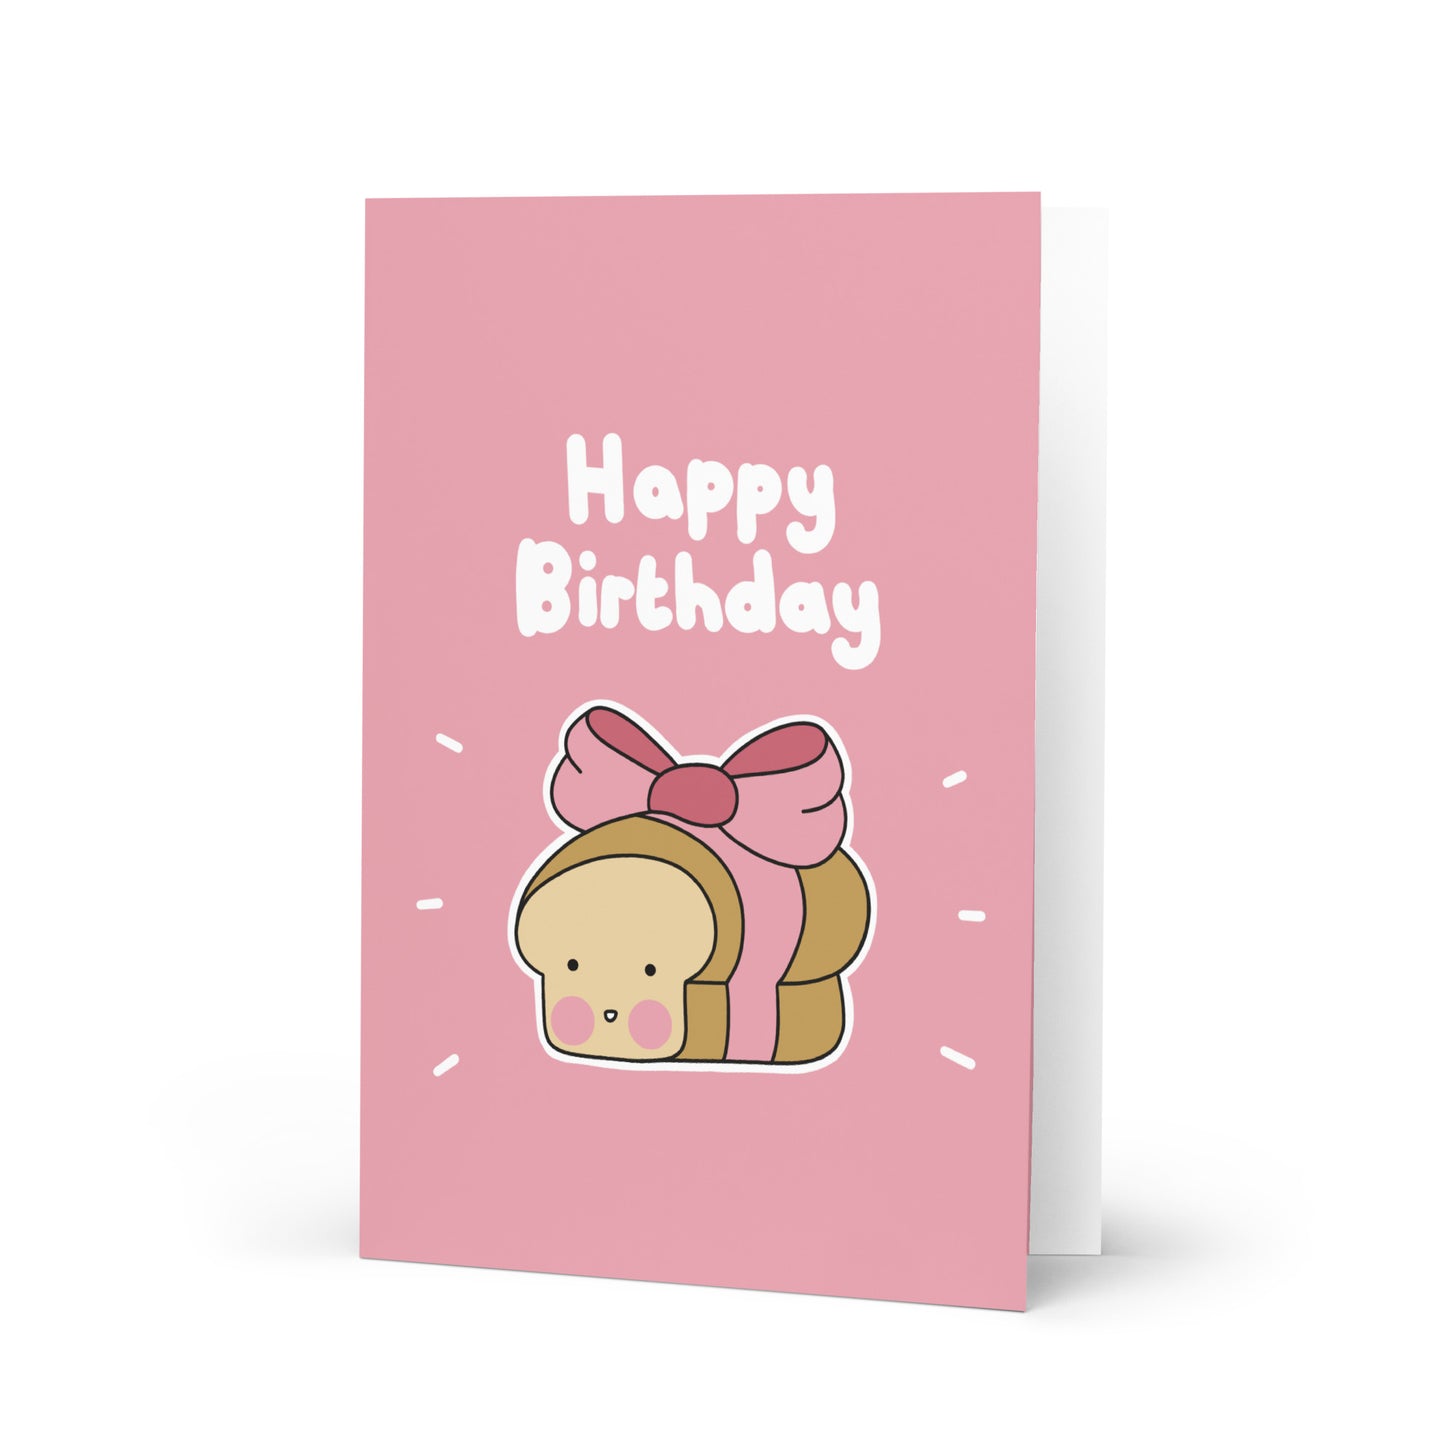 Happy Birthday Loof Greeting Card